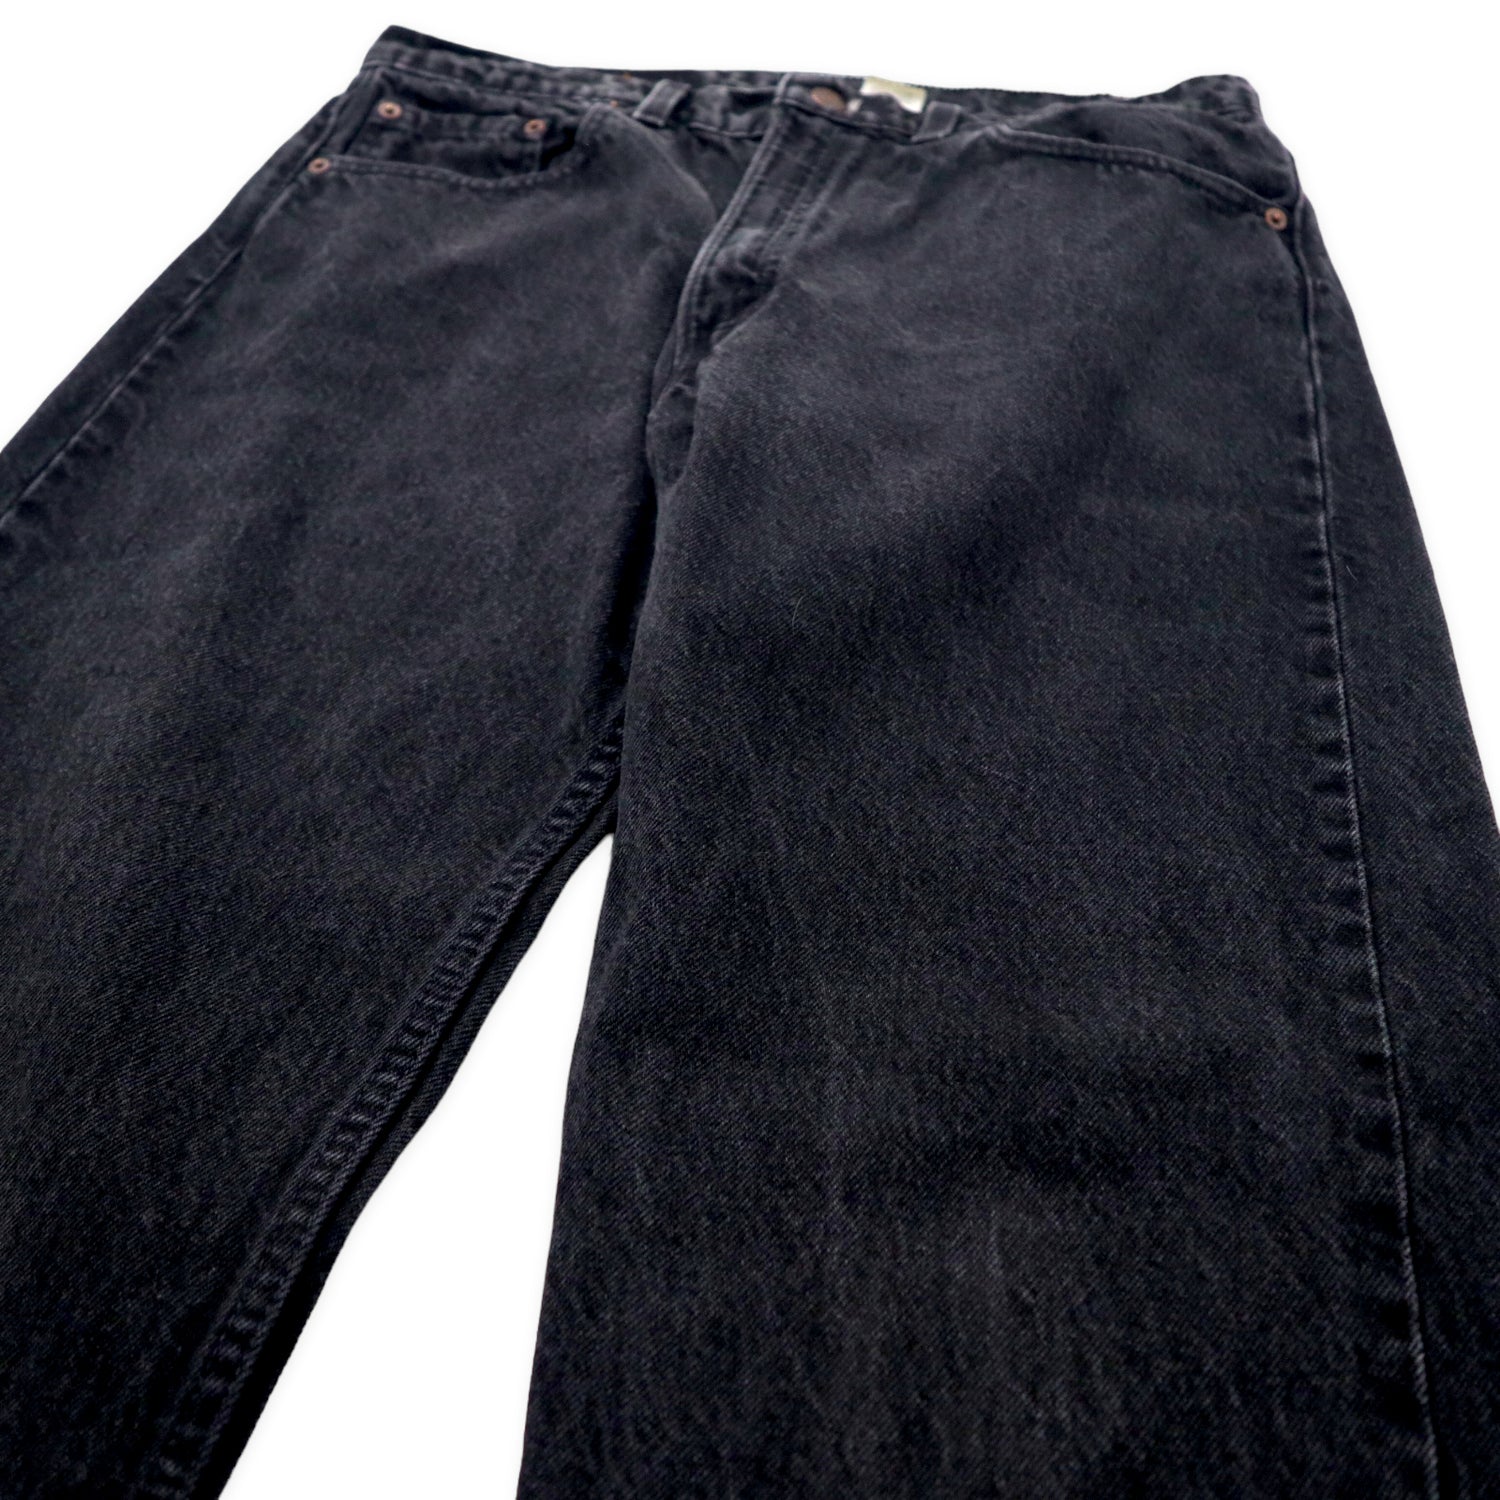 Levi's USA MADE 90's 505 Black Denim Pants 36 REGULAR FIT STRAIGHT ...